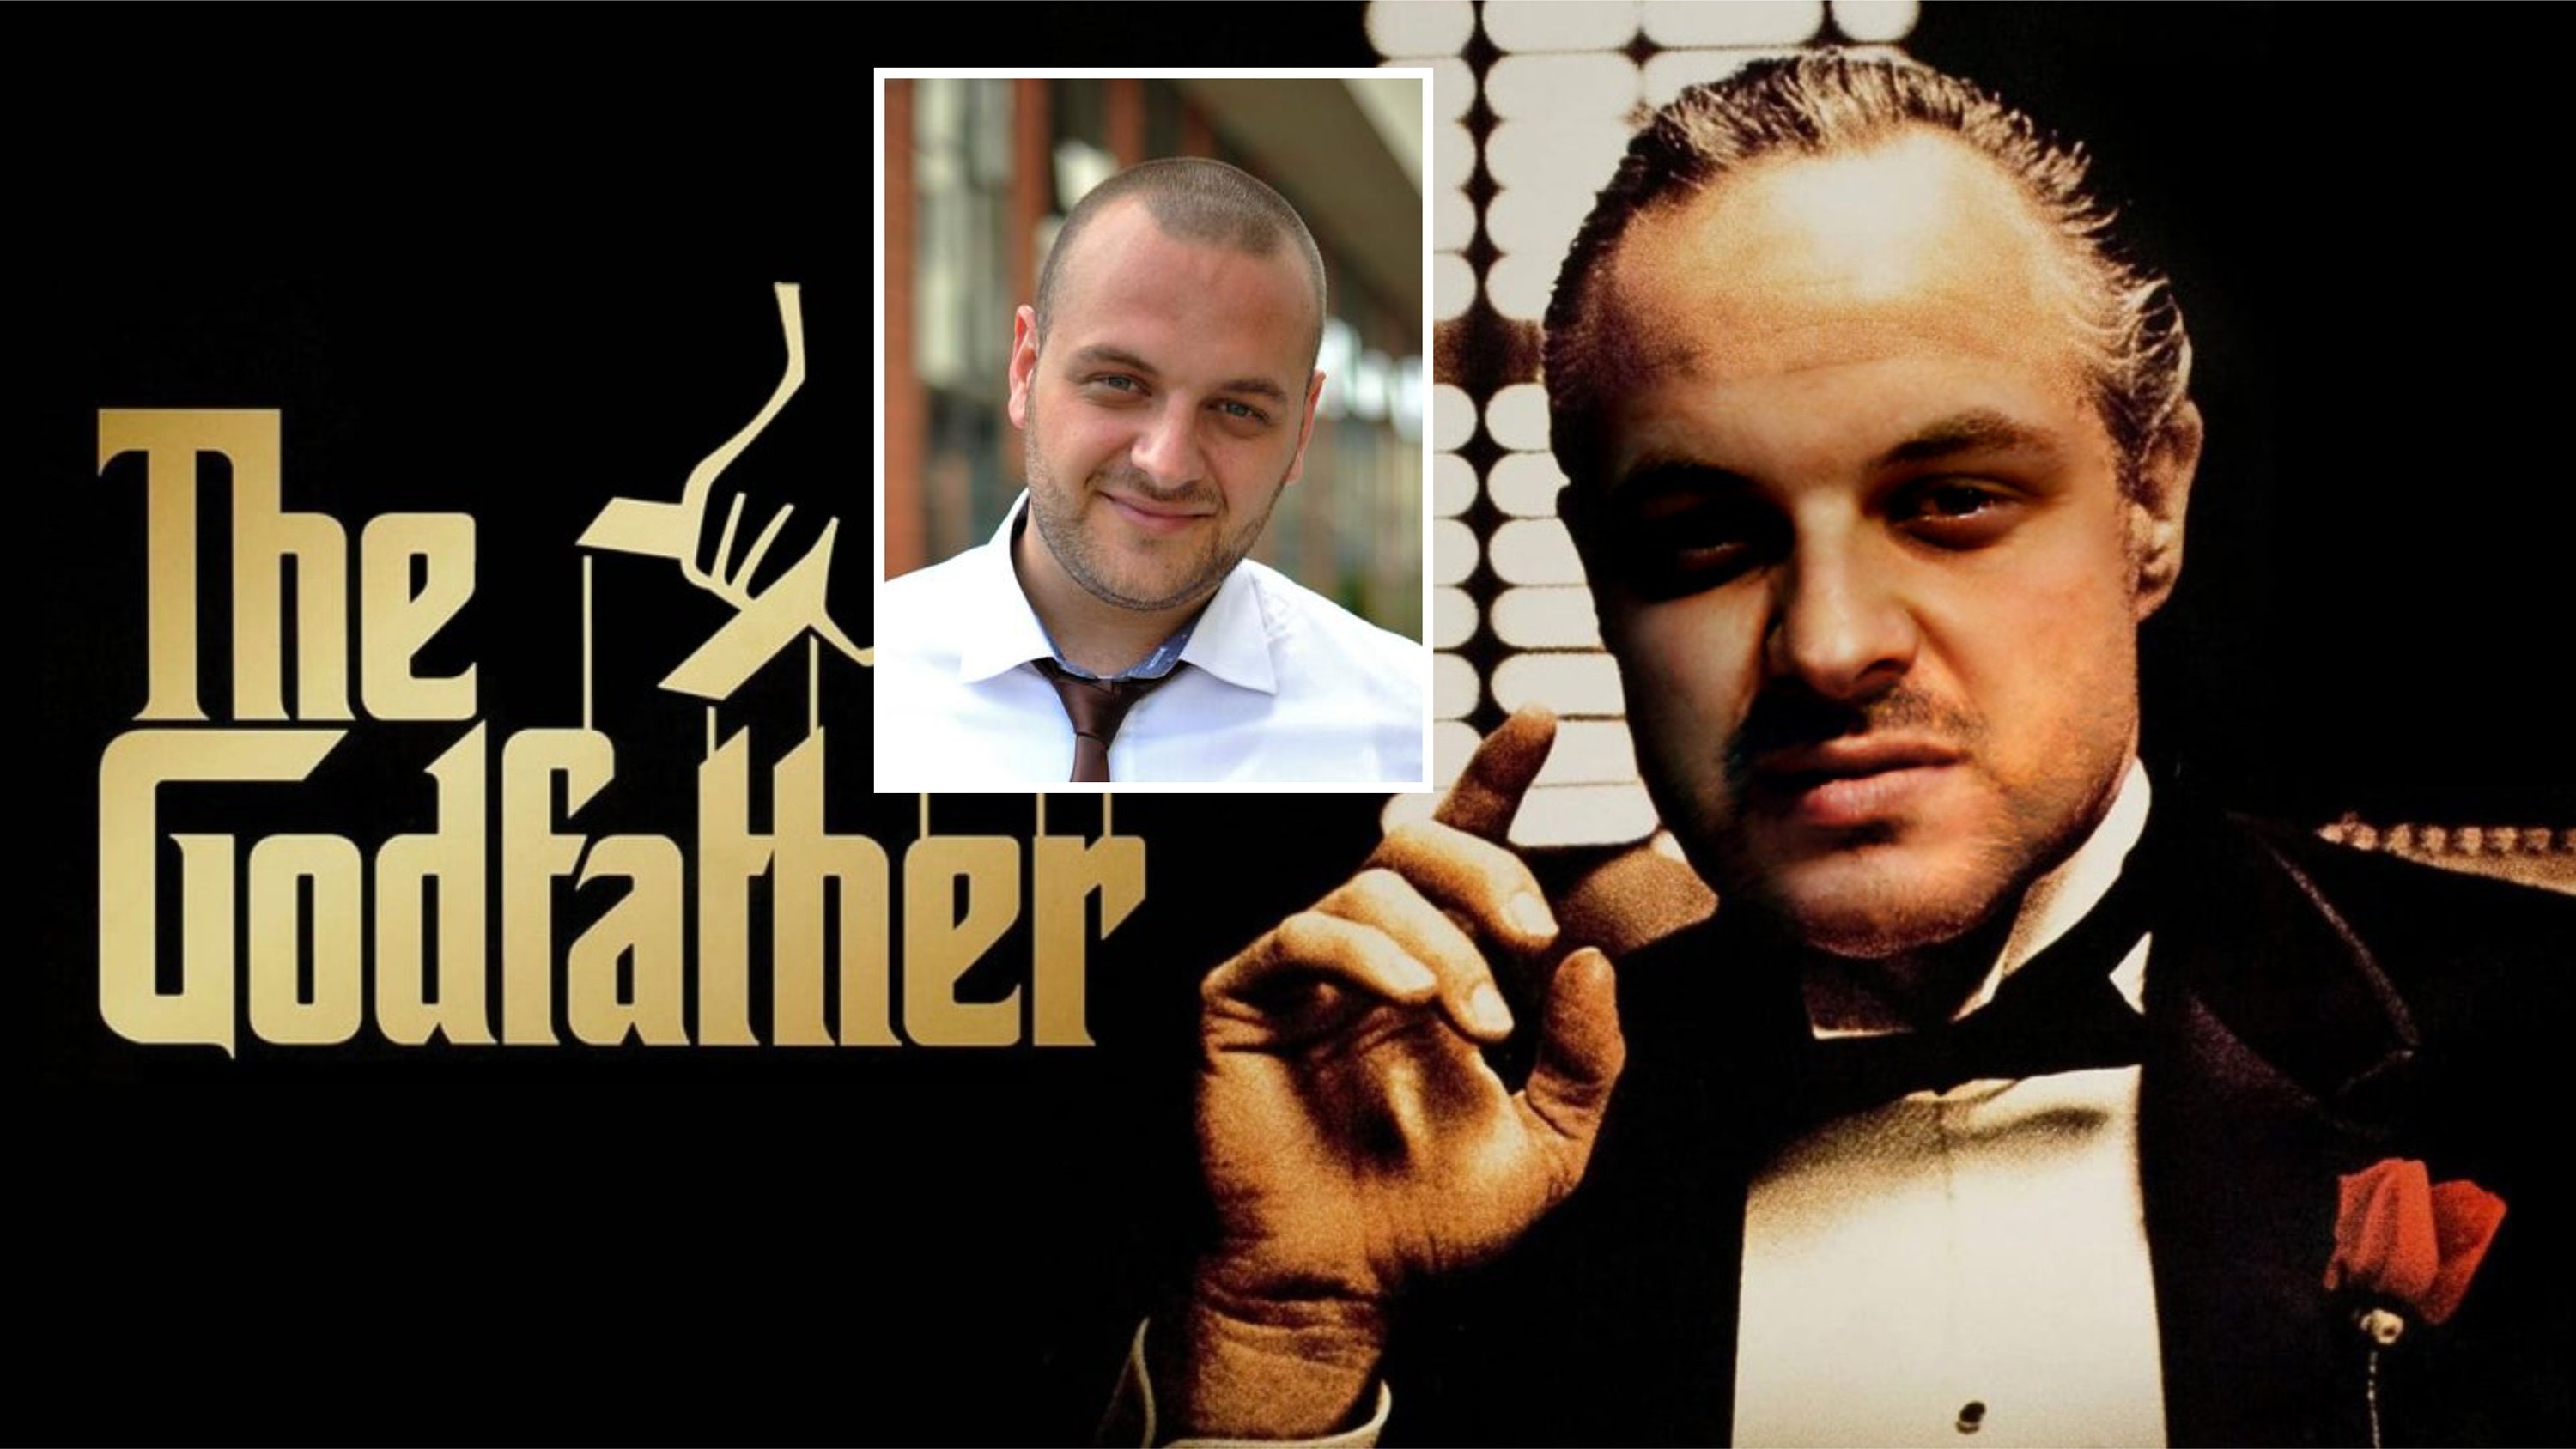 Godfather 2 Movie Poster